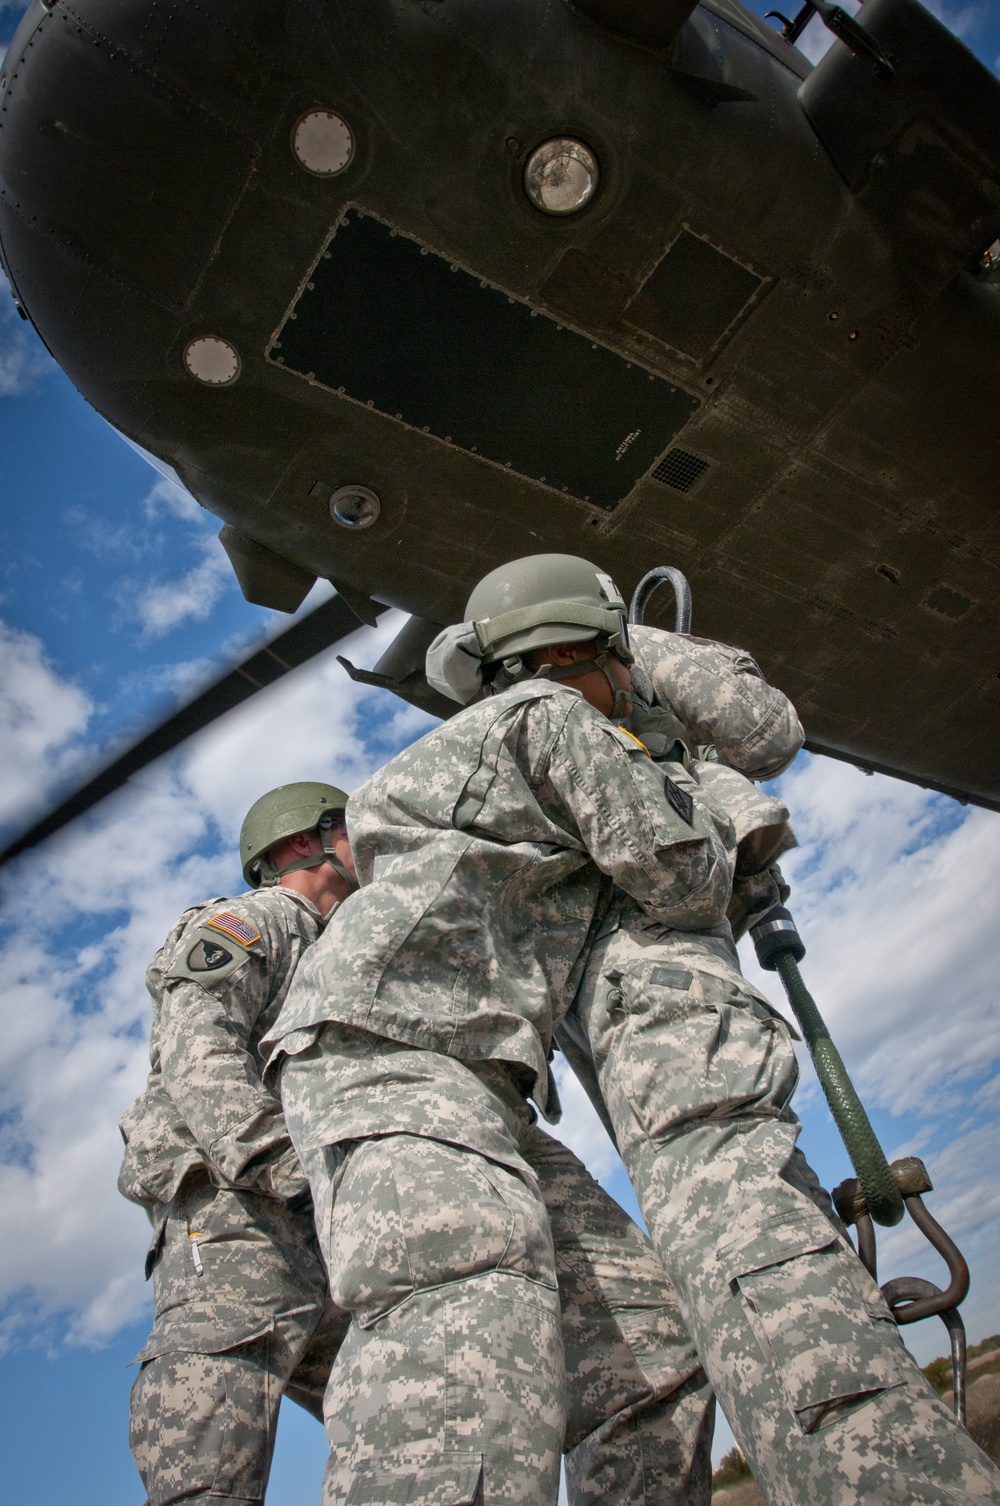 Air Assault school sling load testing on Fort Hood